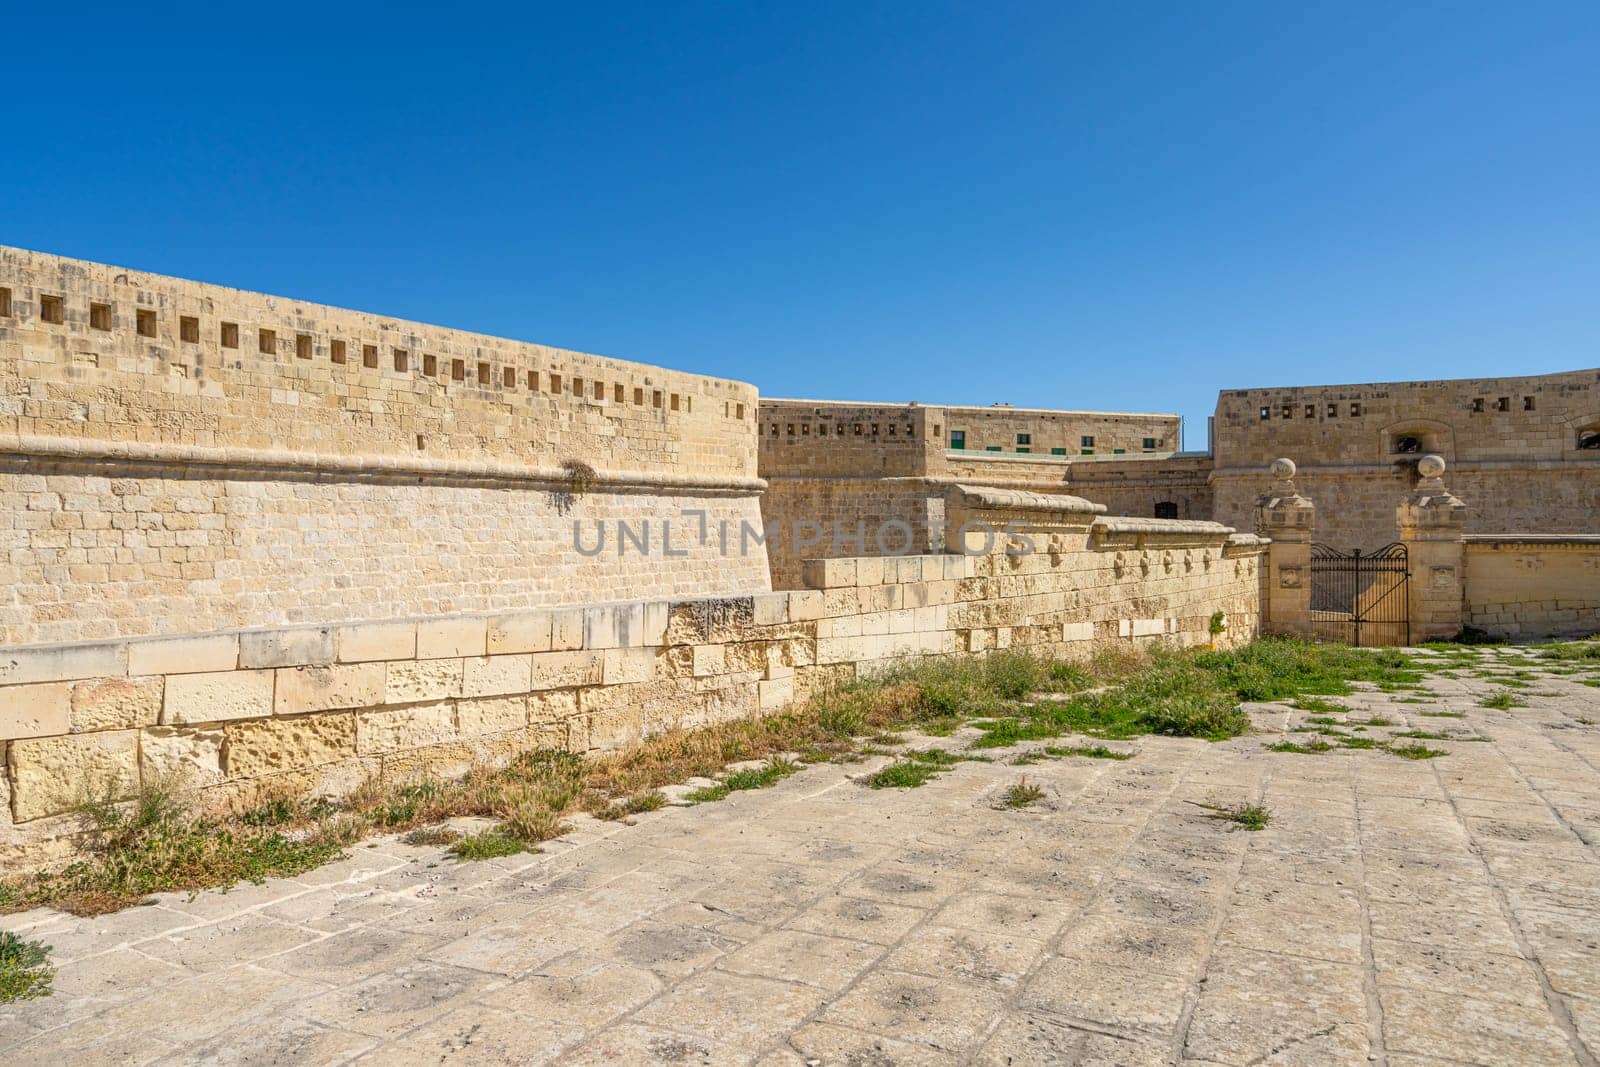  St. Elmo fort in Valletta, Malta by sergiodv